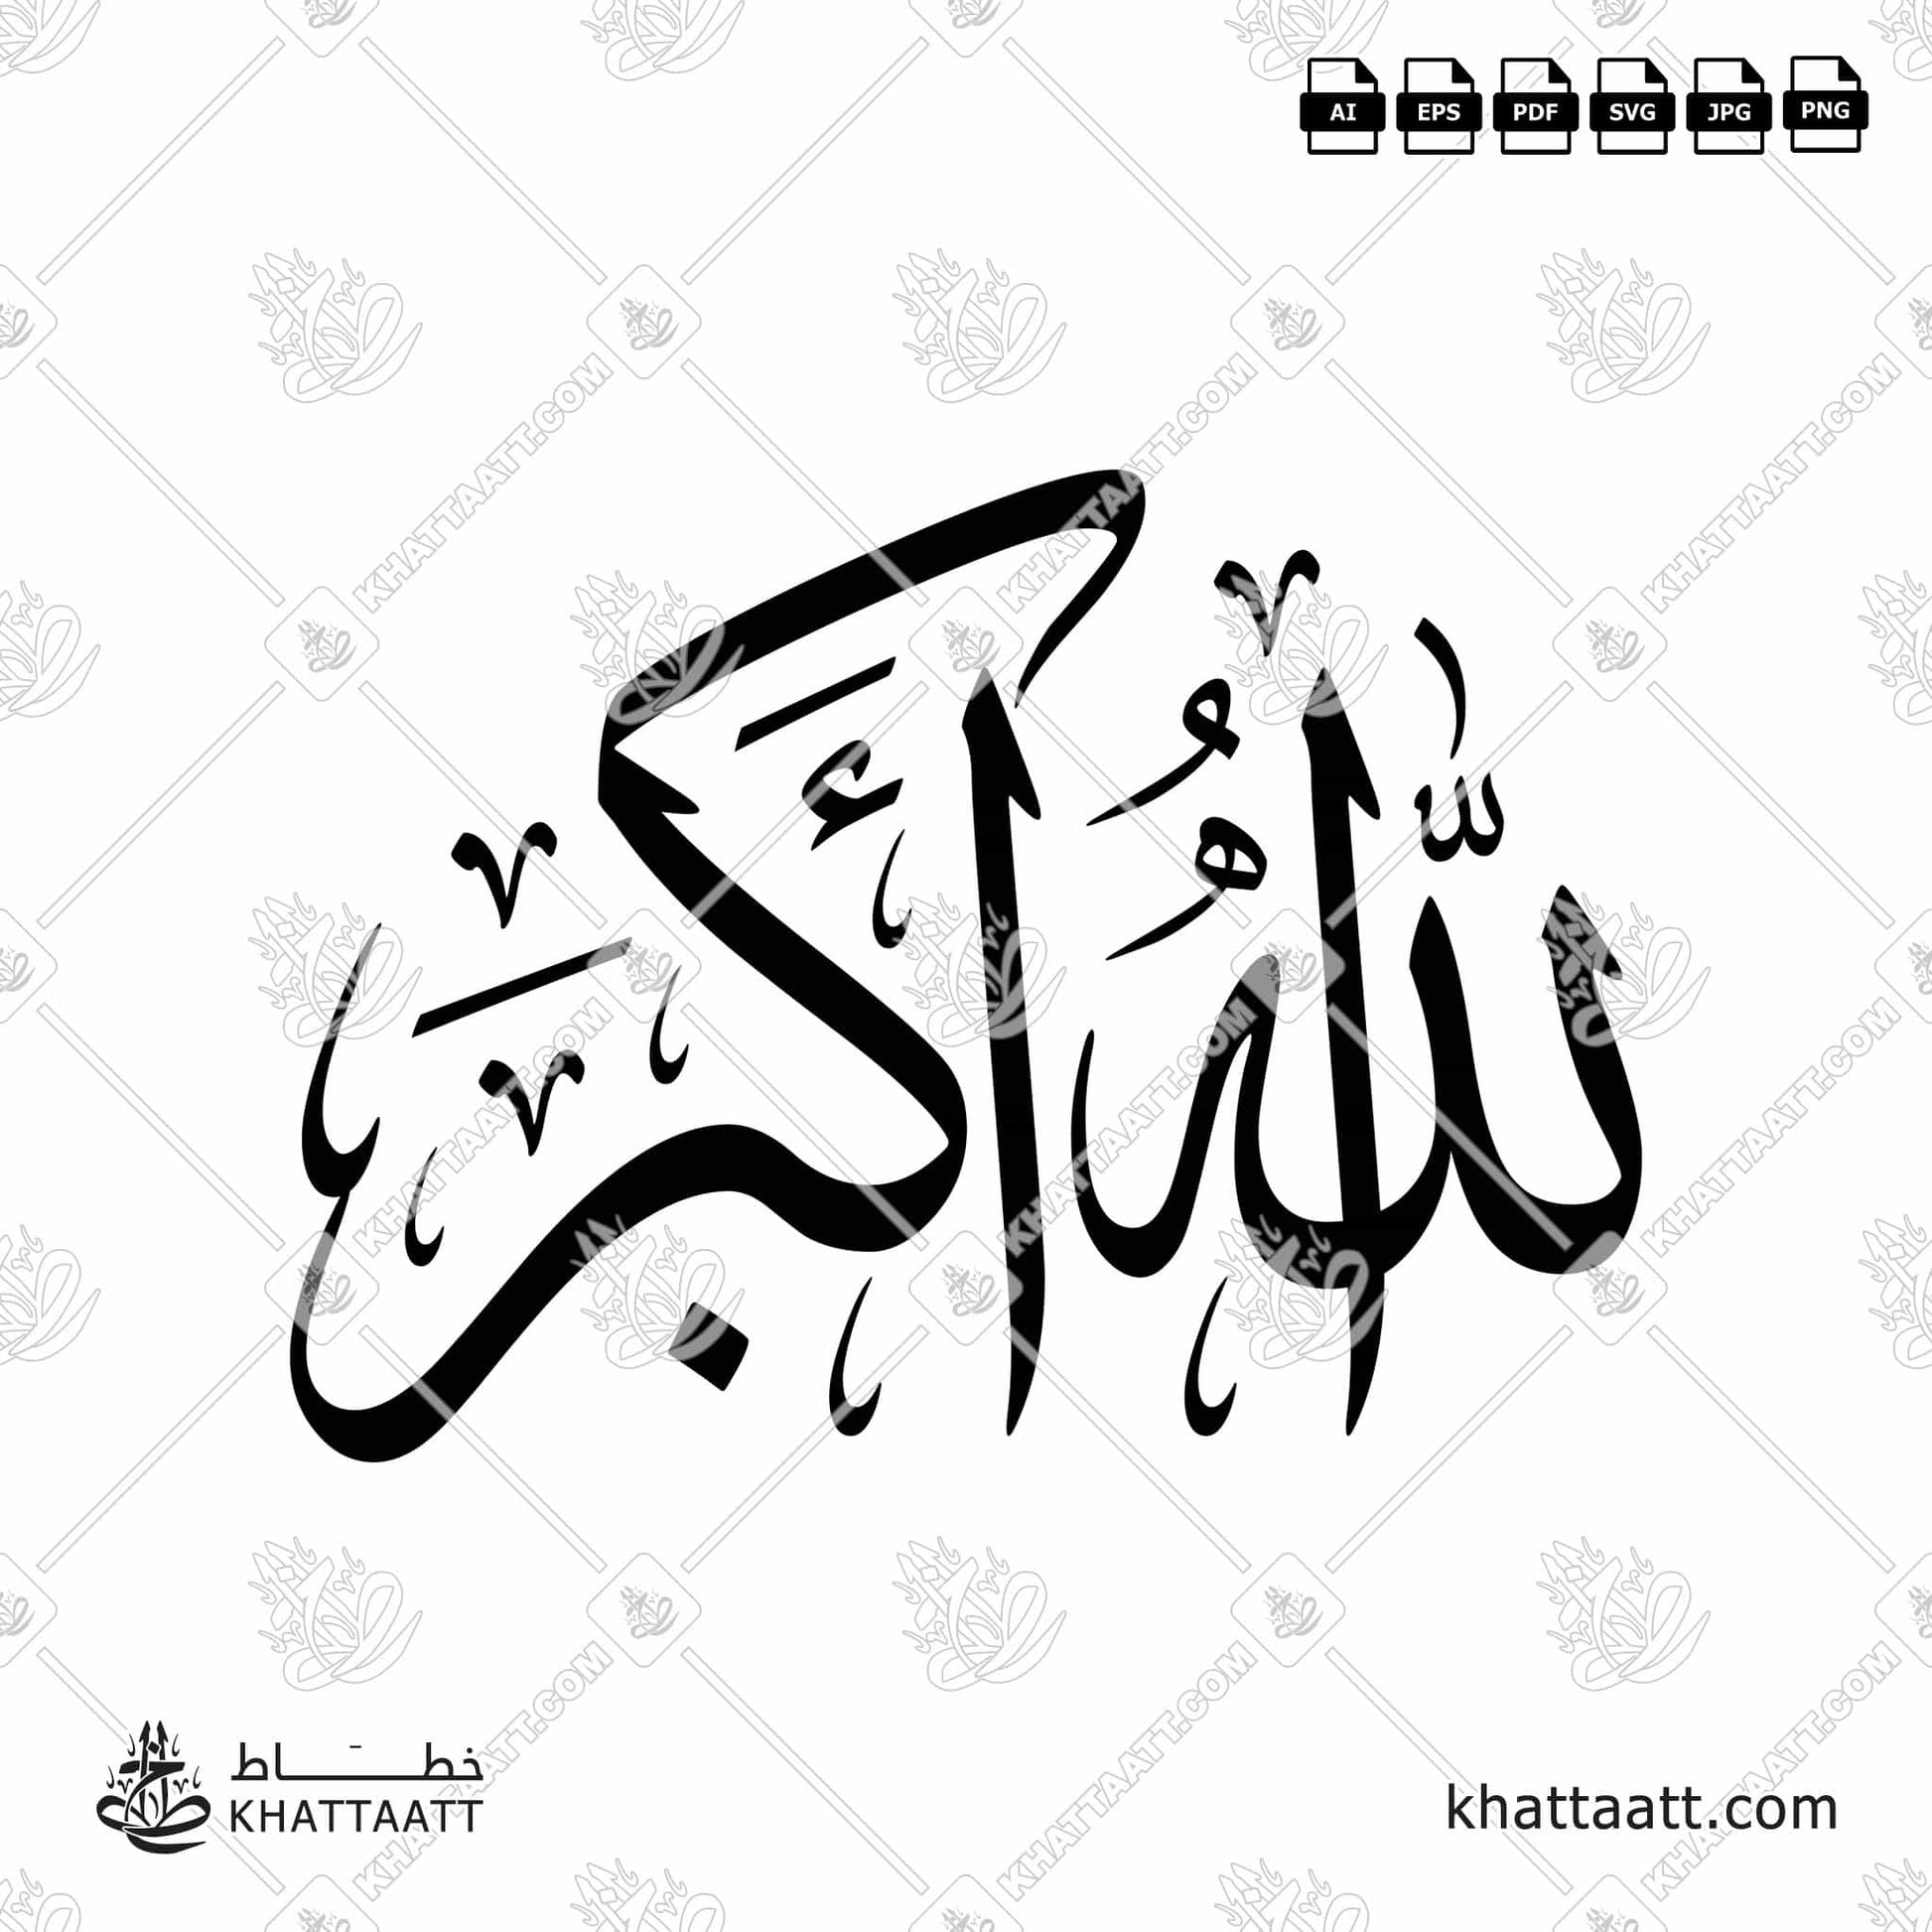 Download Arabic calligraphy تحميل مخطوطة خط عربي of ALLAHU AKBAR - الله أكبر (T034) Thuluth - خط الثلث in vector فيكتور and png